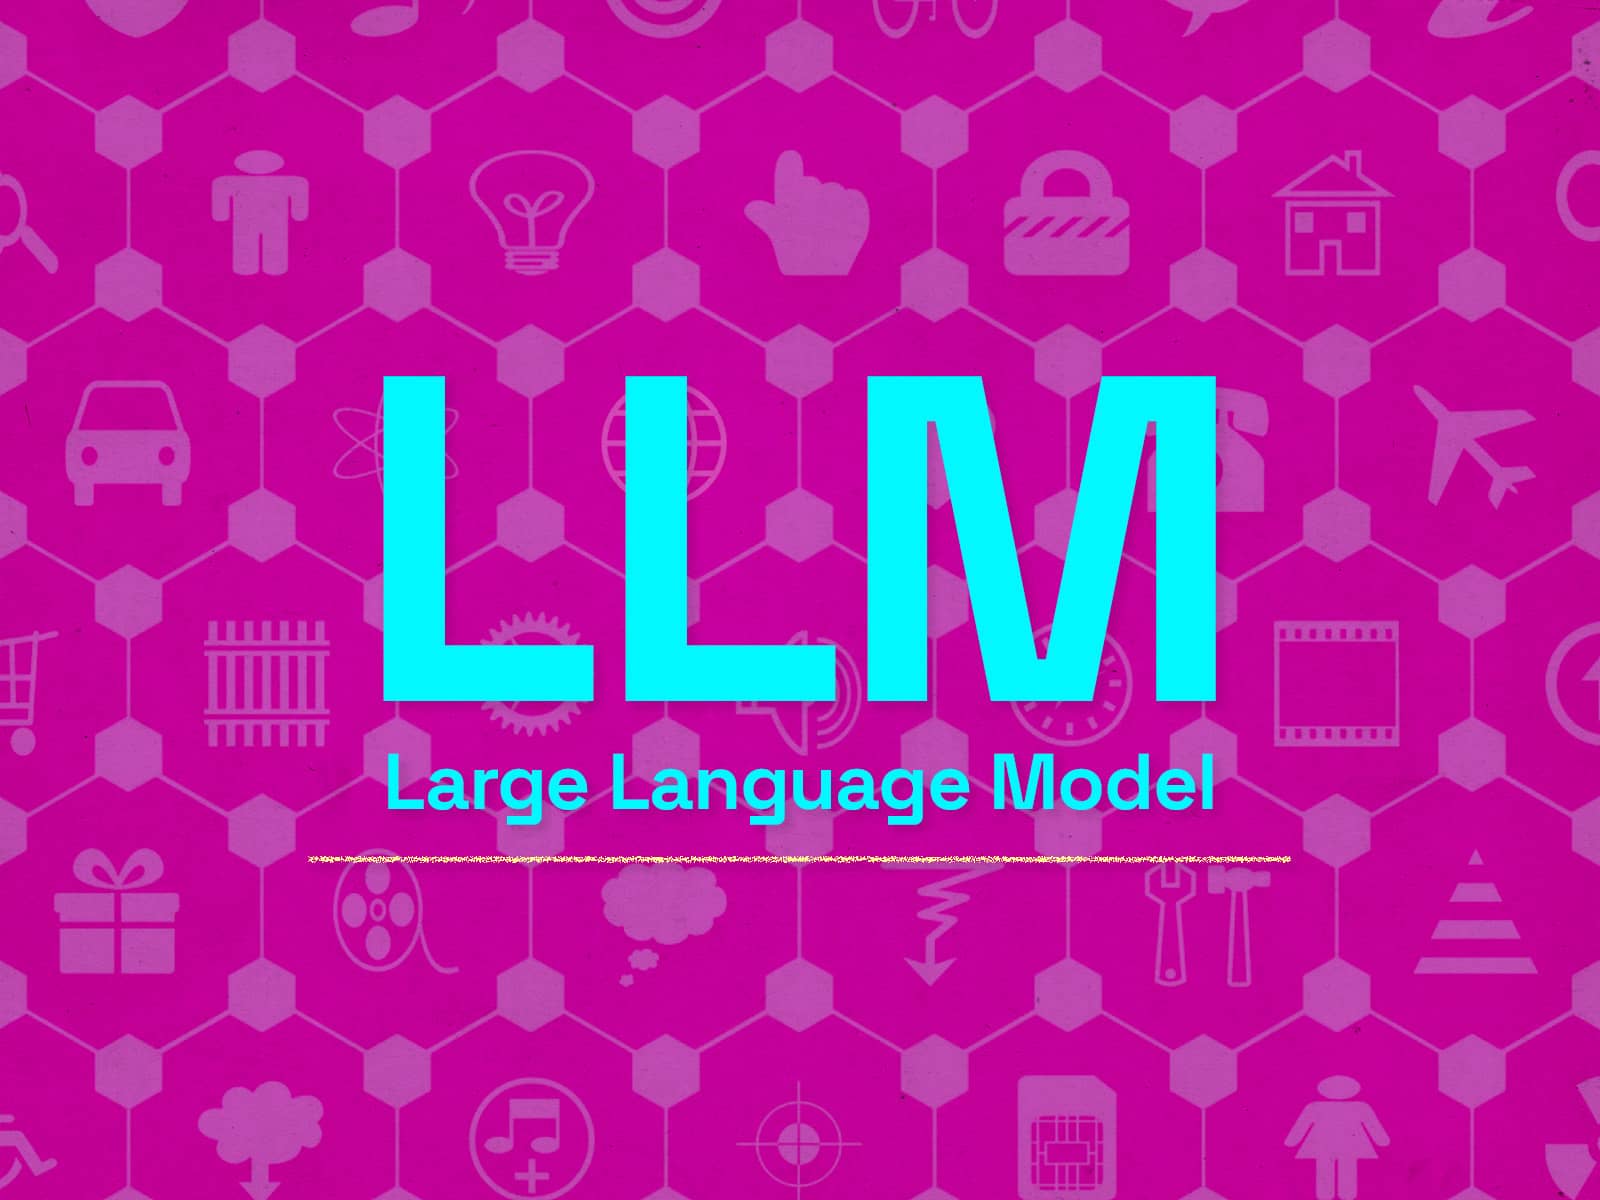 Large Language Models: An Interview with Scott Sandland